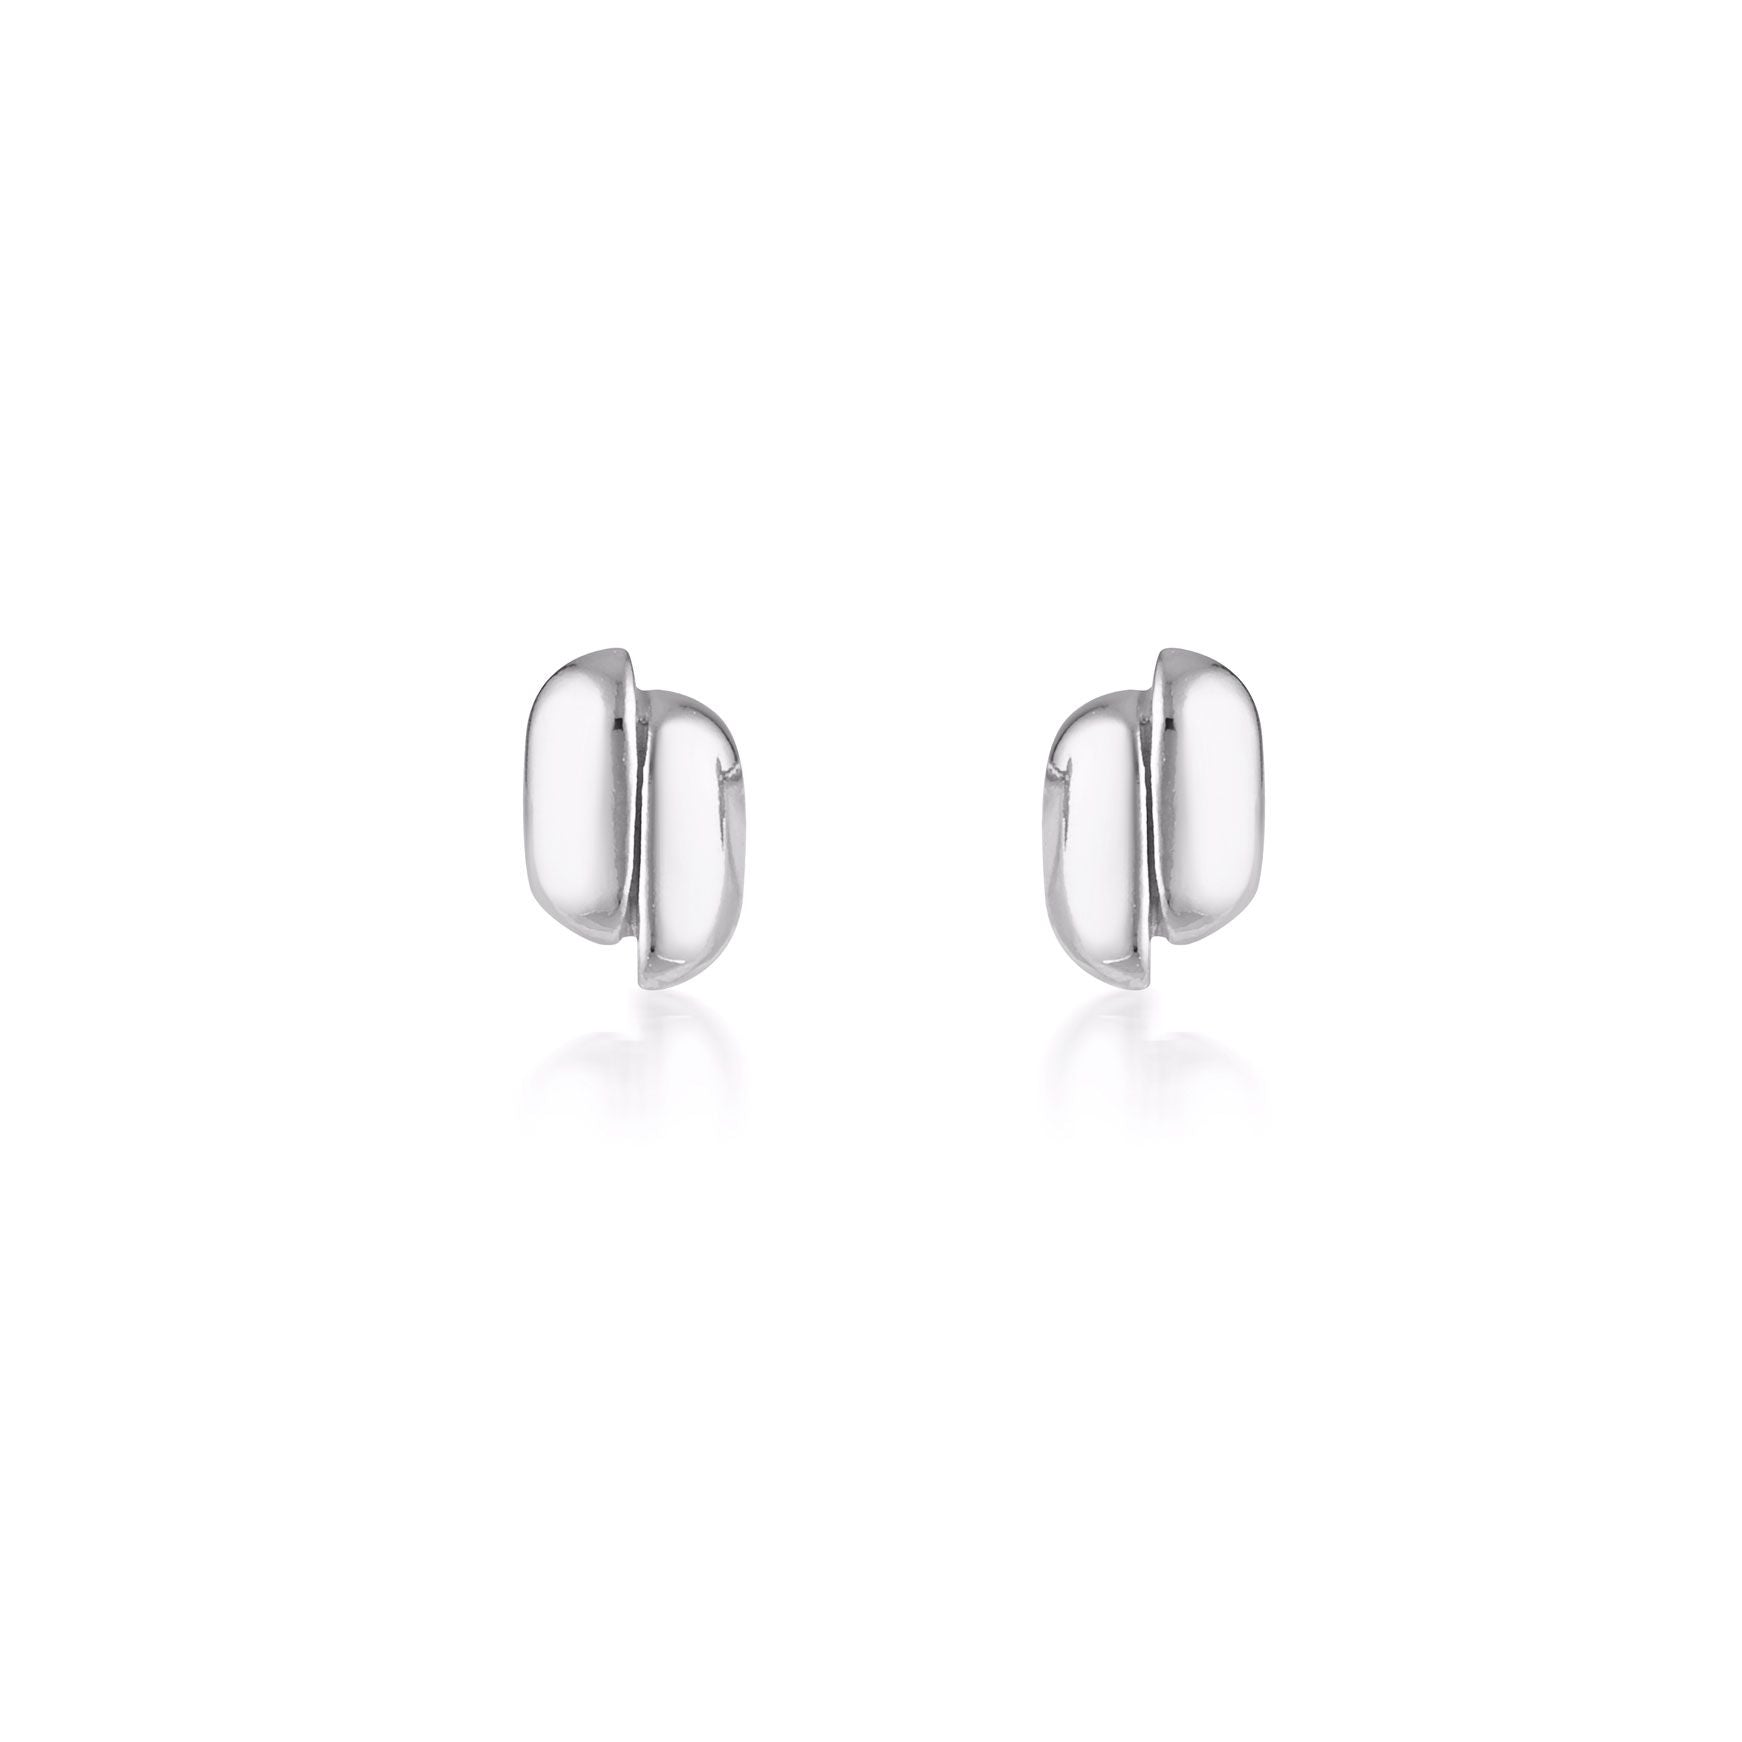 Linda Tahija Profile Stud Earrings Silver